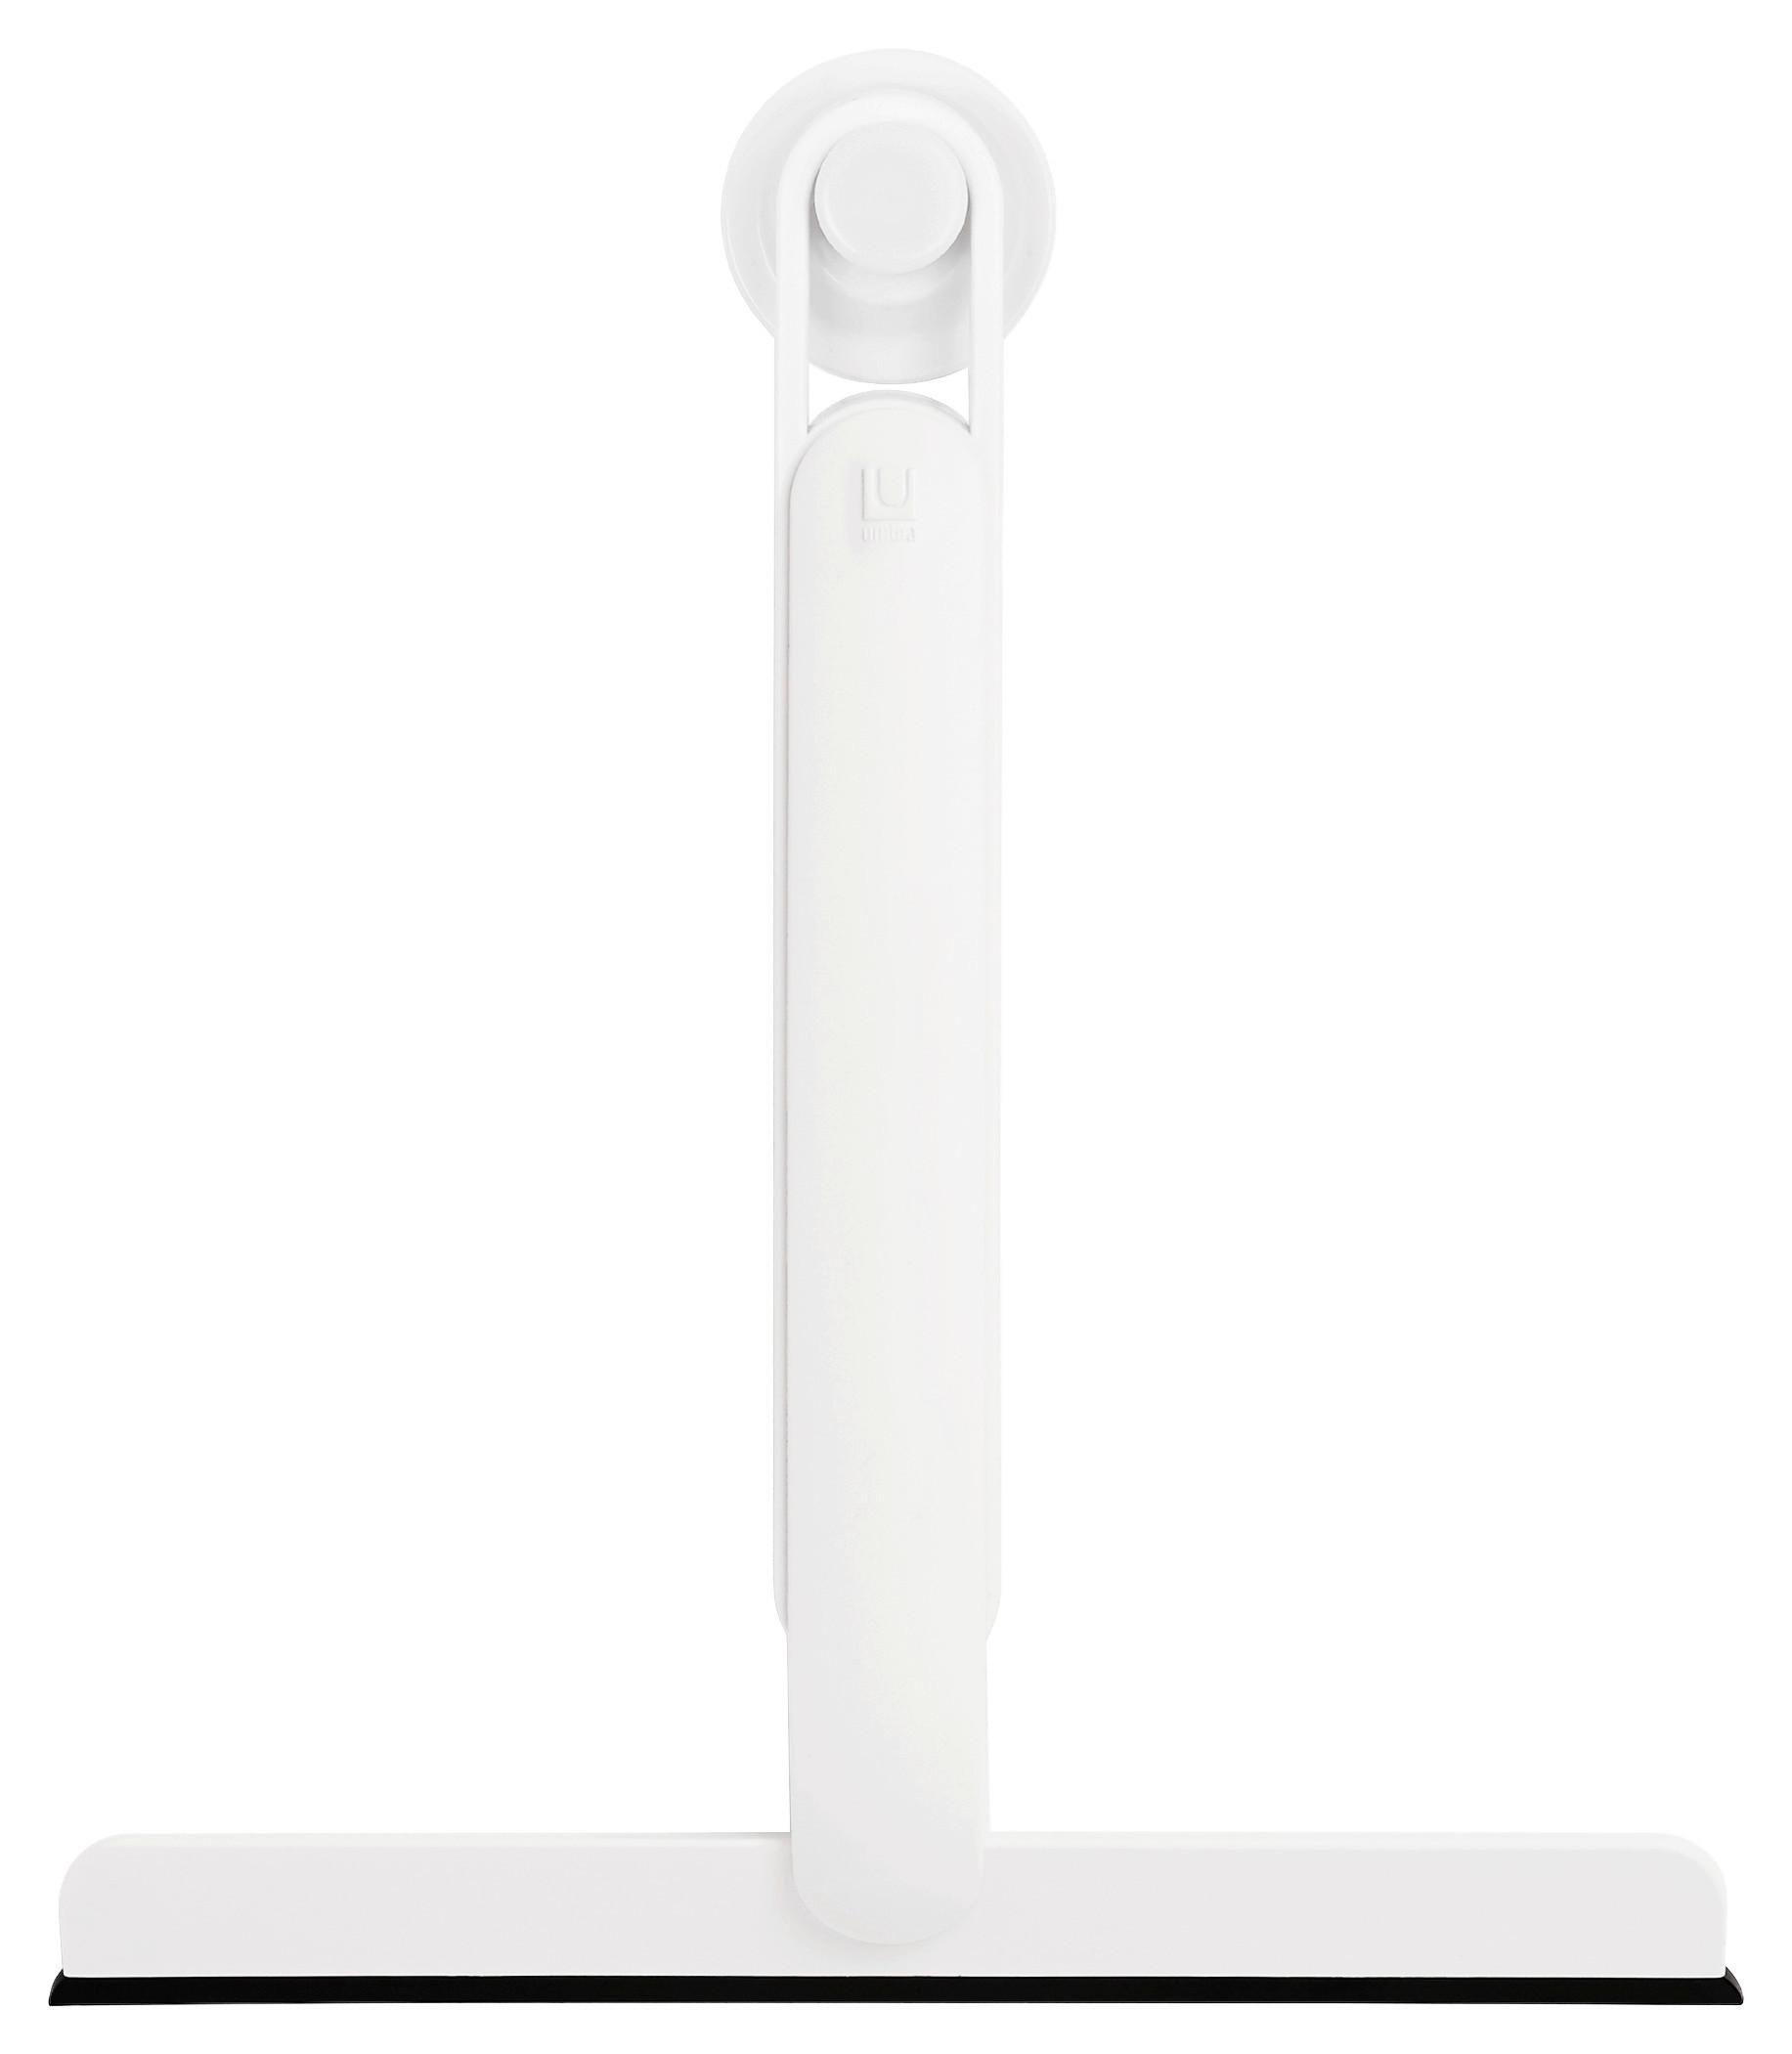 Stěrka Na Sprchové Kouty Easy - bílá, Moderní, plast (40/26/4,4cm) - Premium Living